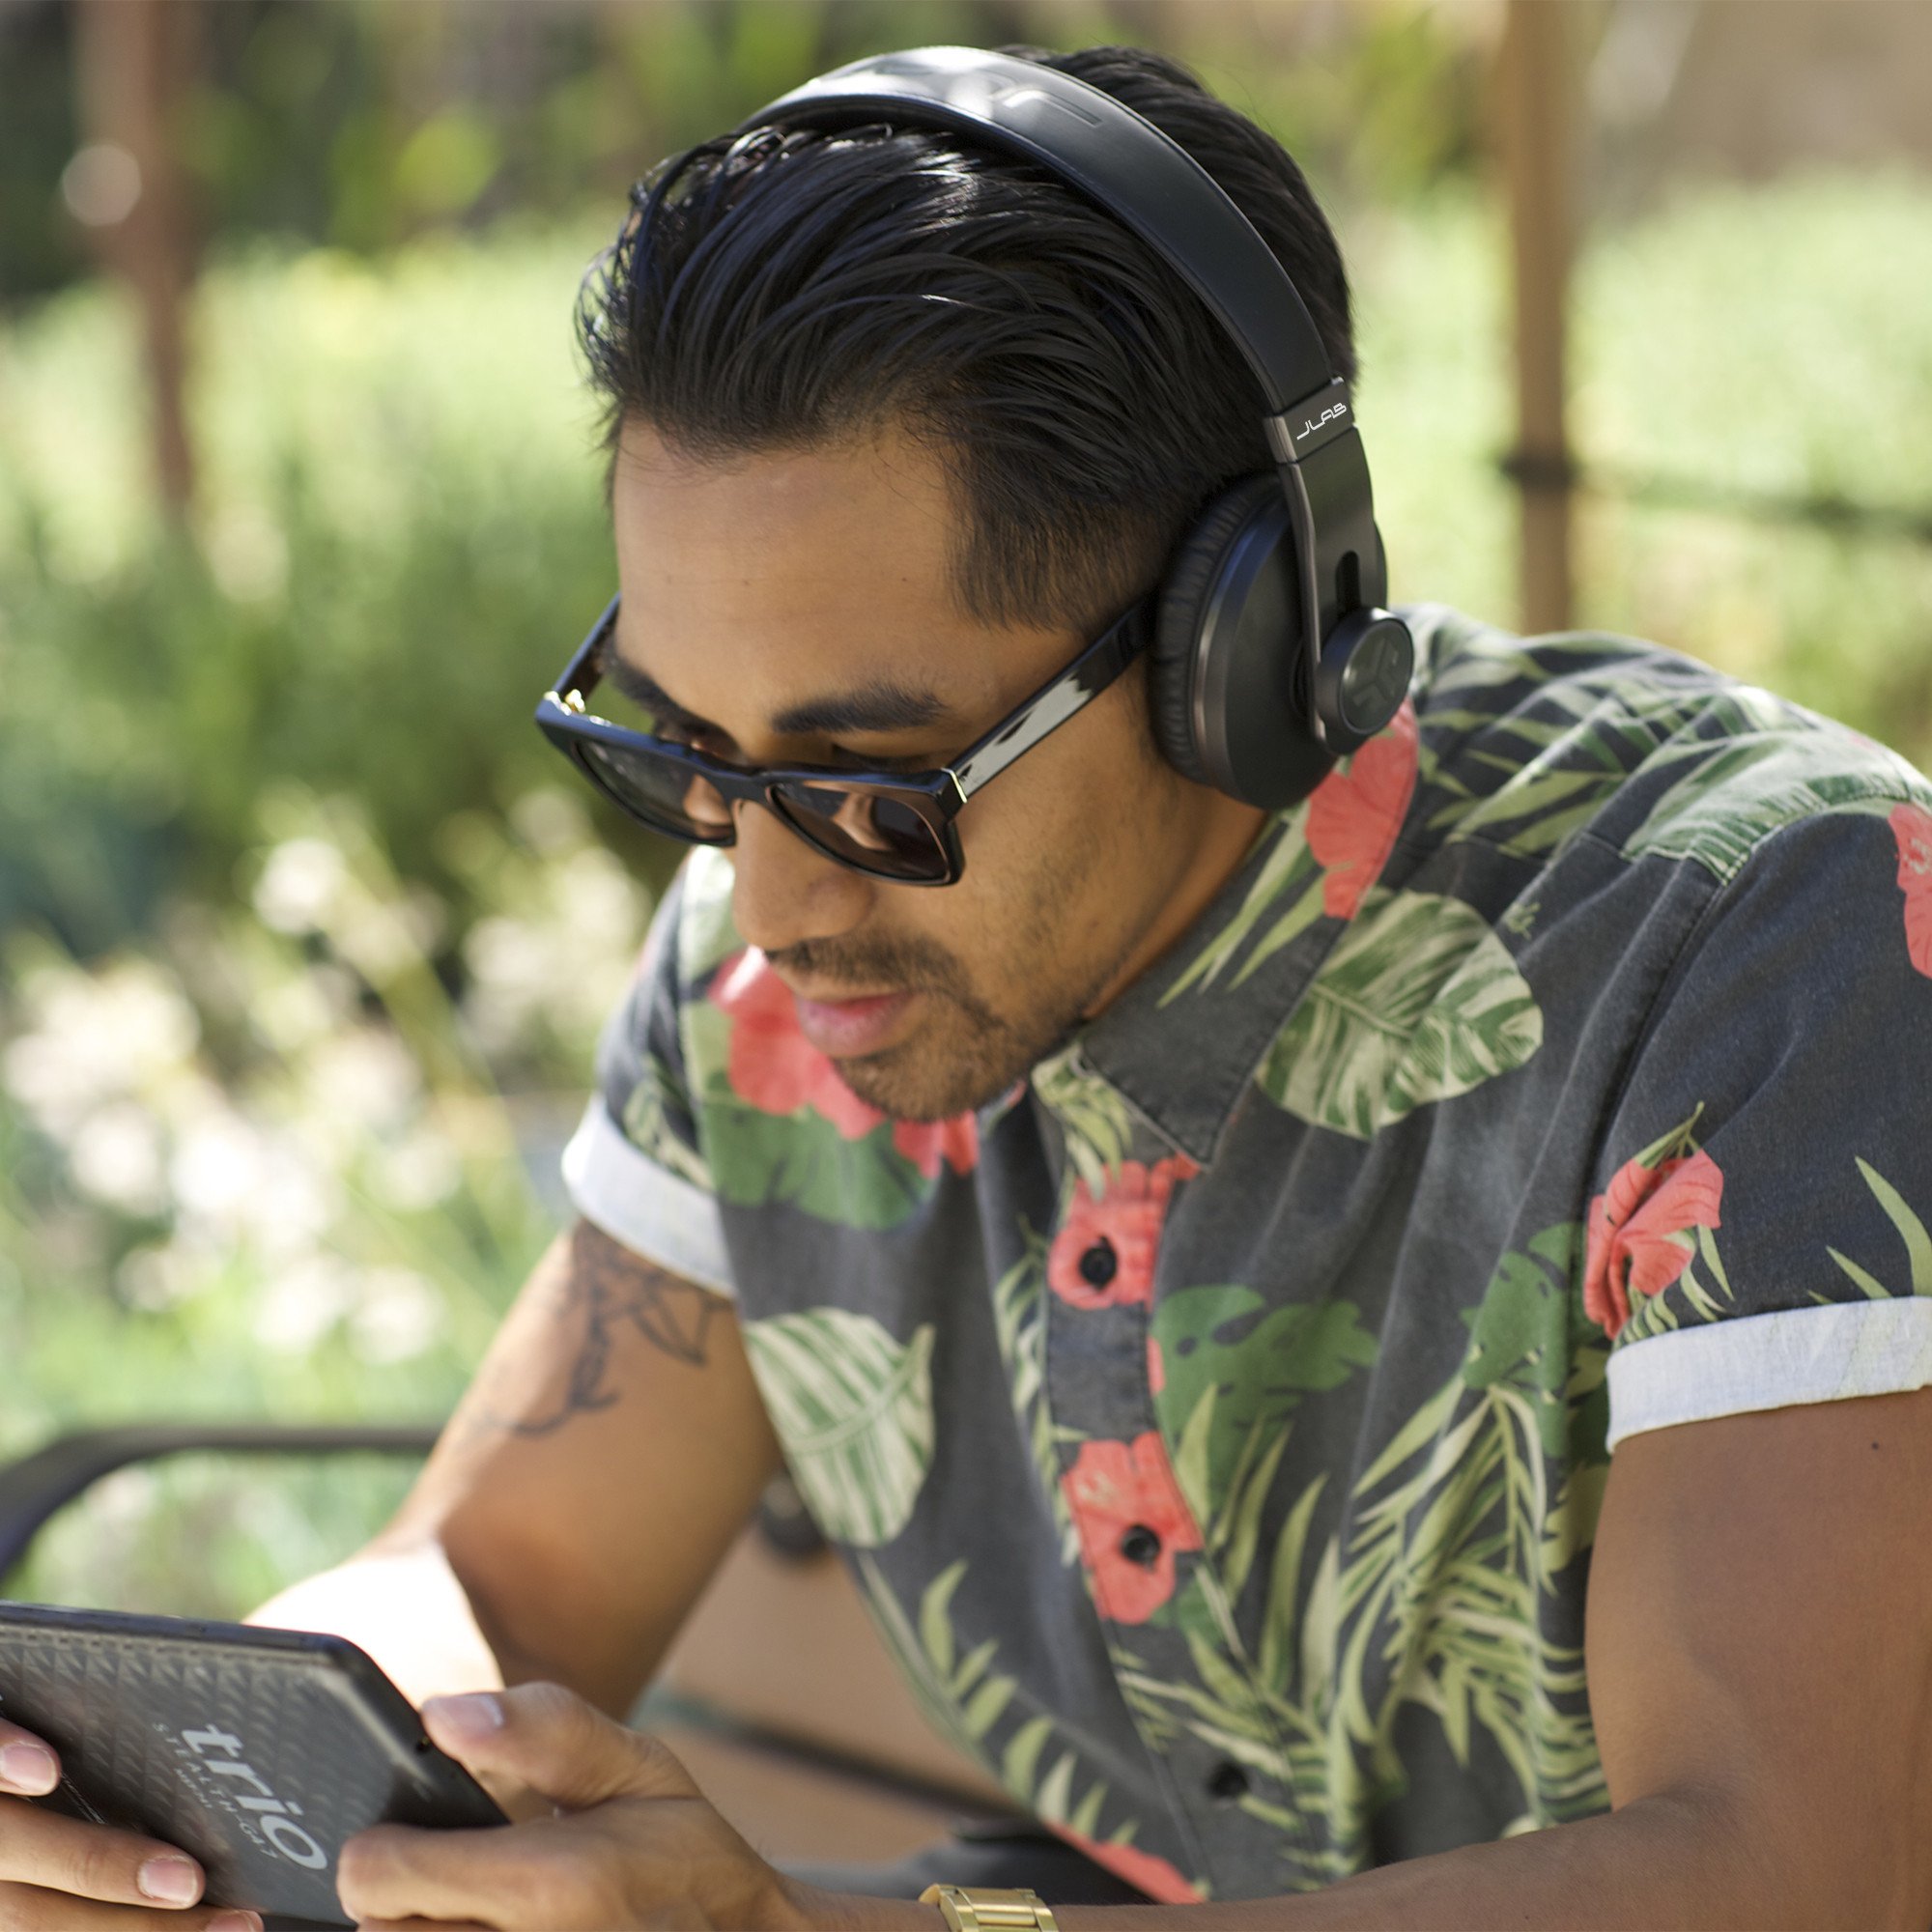 JLab Audio OMNI Premium Over-Ear Bluetooth Headphones with Mic - Black - image 5 of 7